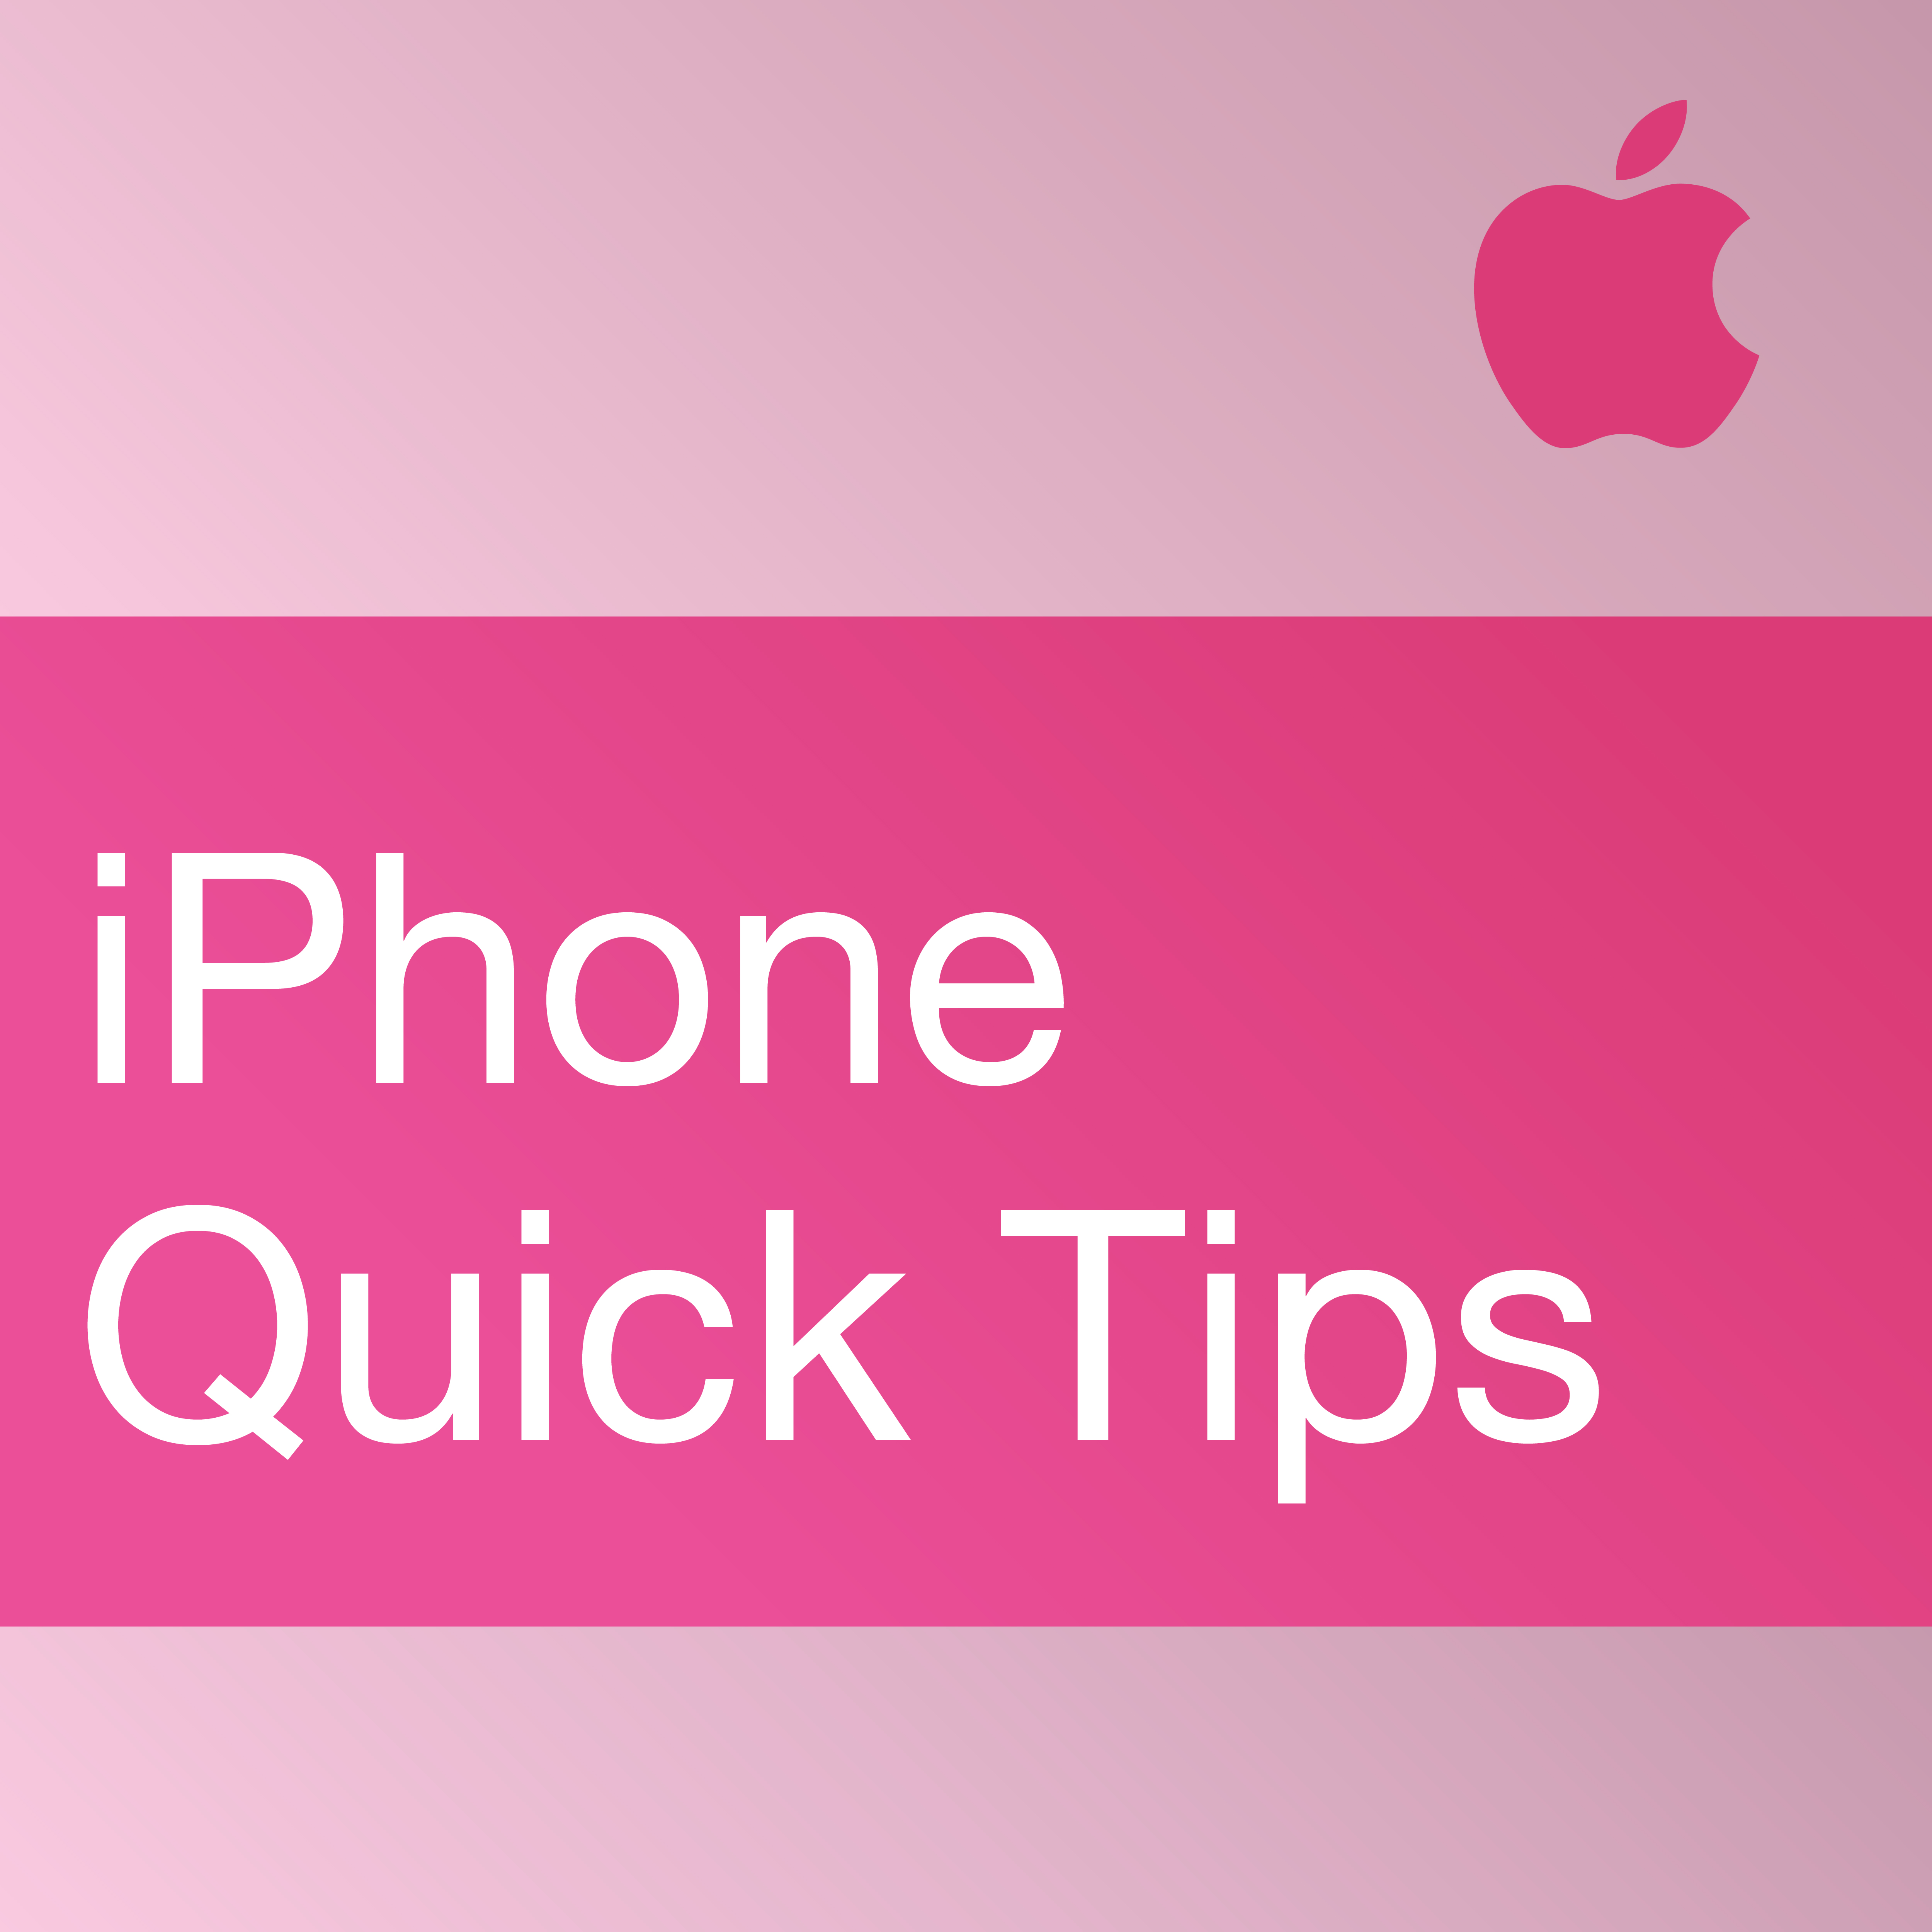 iPhone Quick Tips